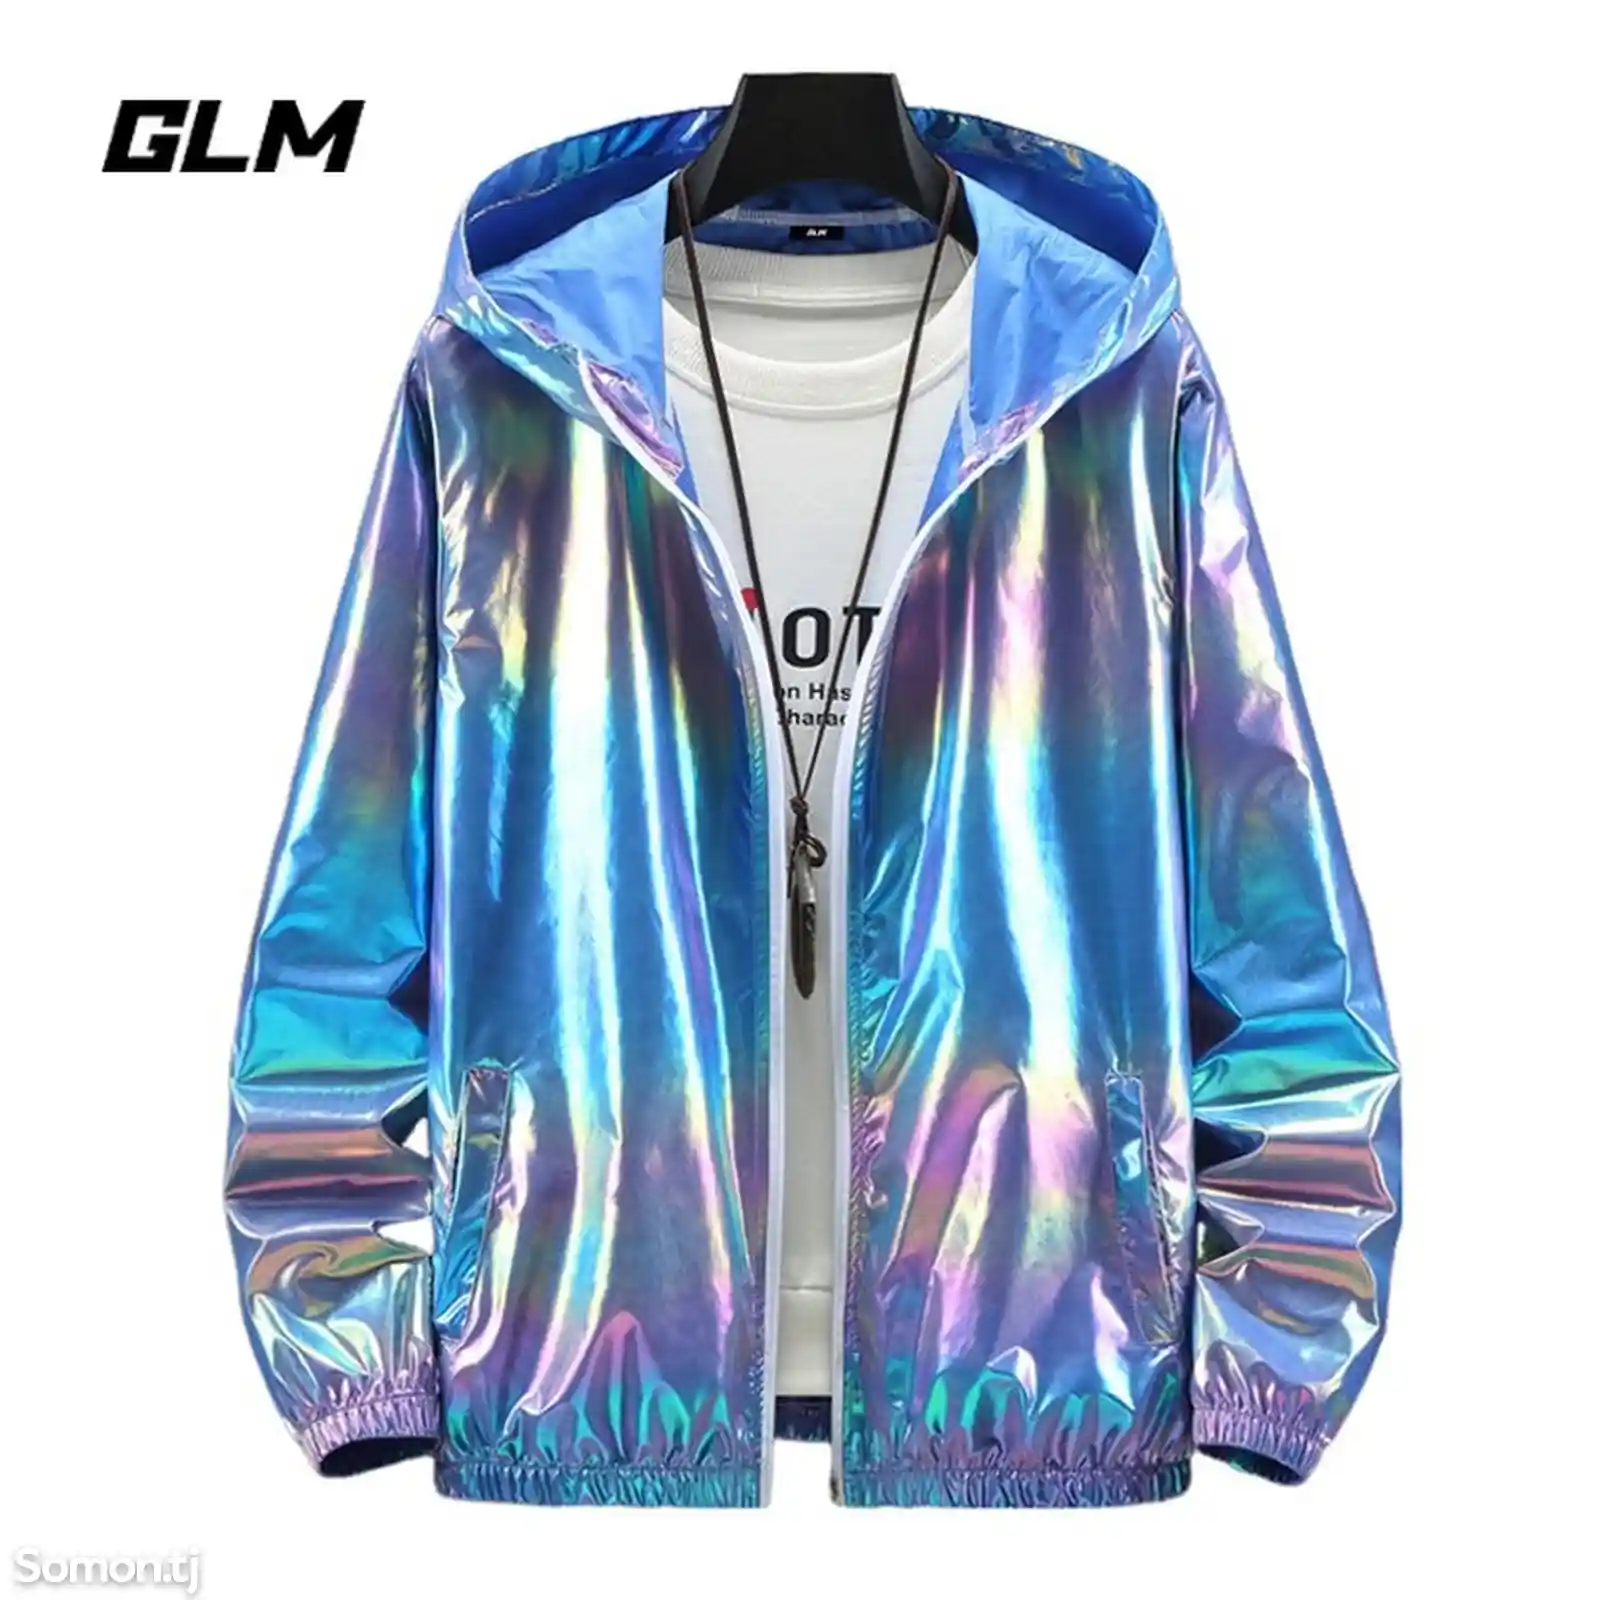 Солнцезащитная куртка GLM на заказ-3